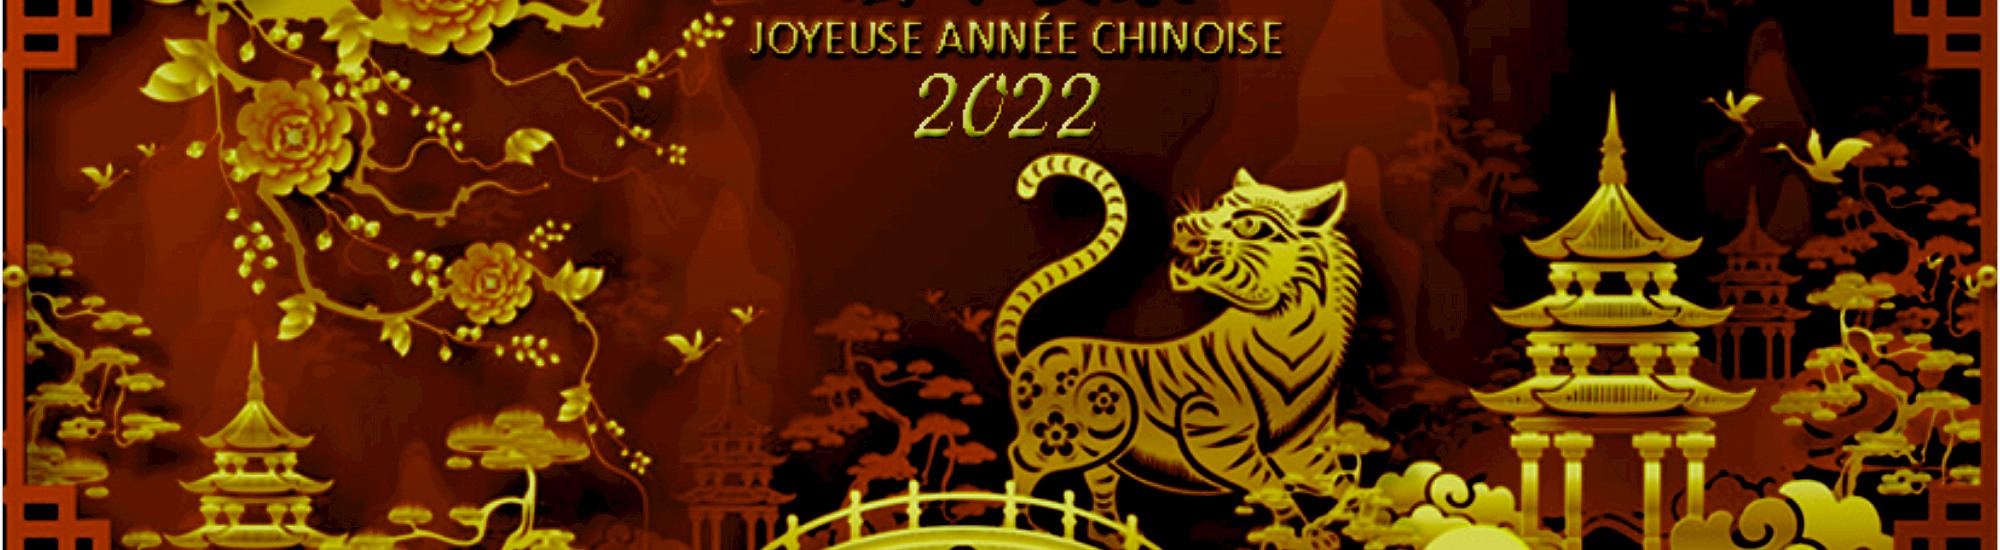 joyeuse annee chinoise 2022